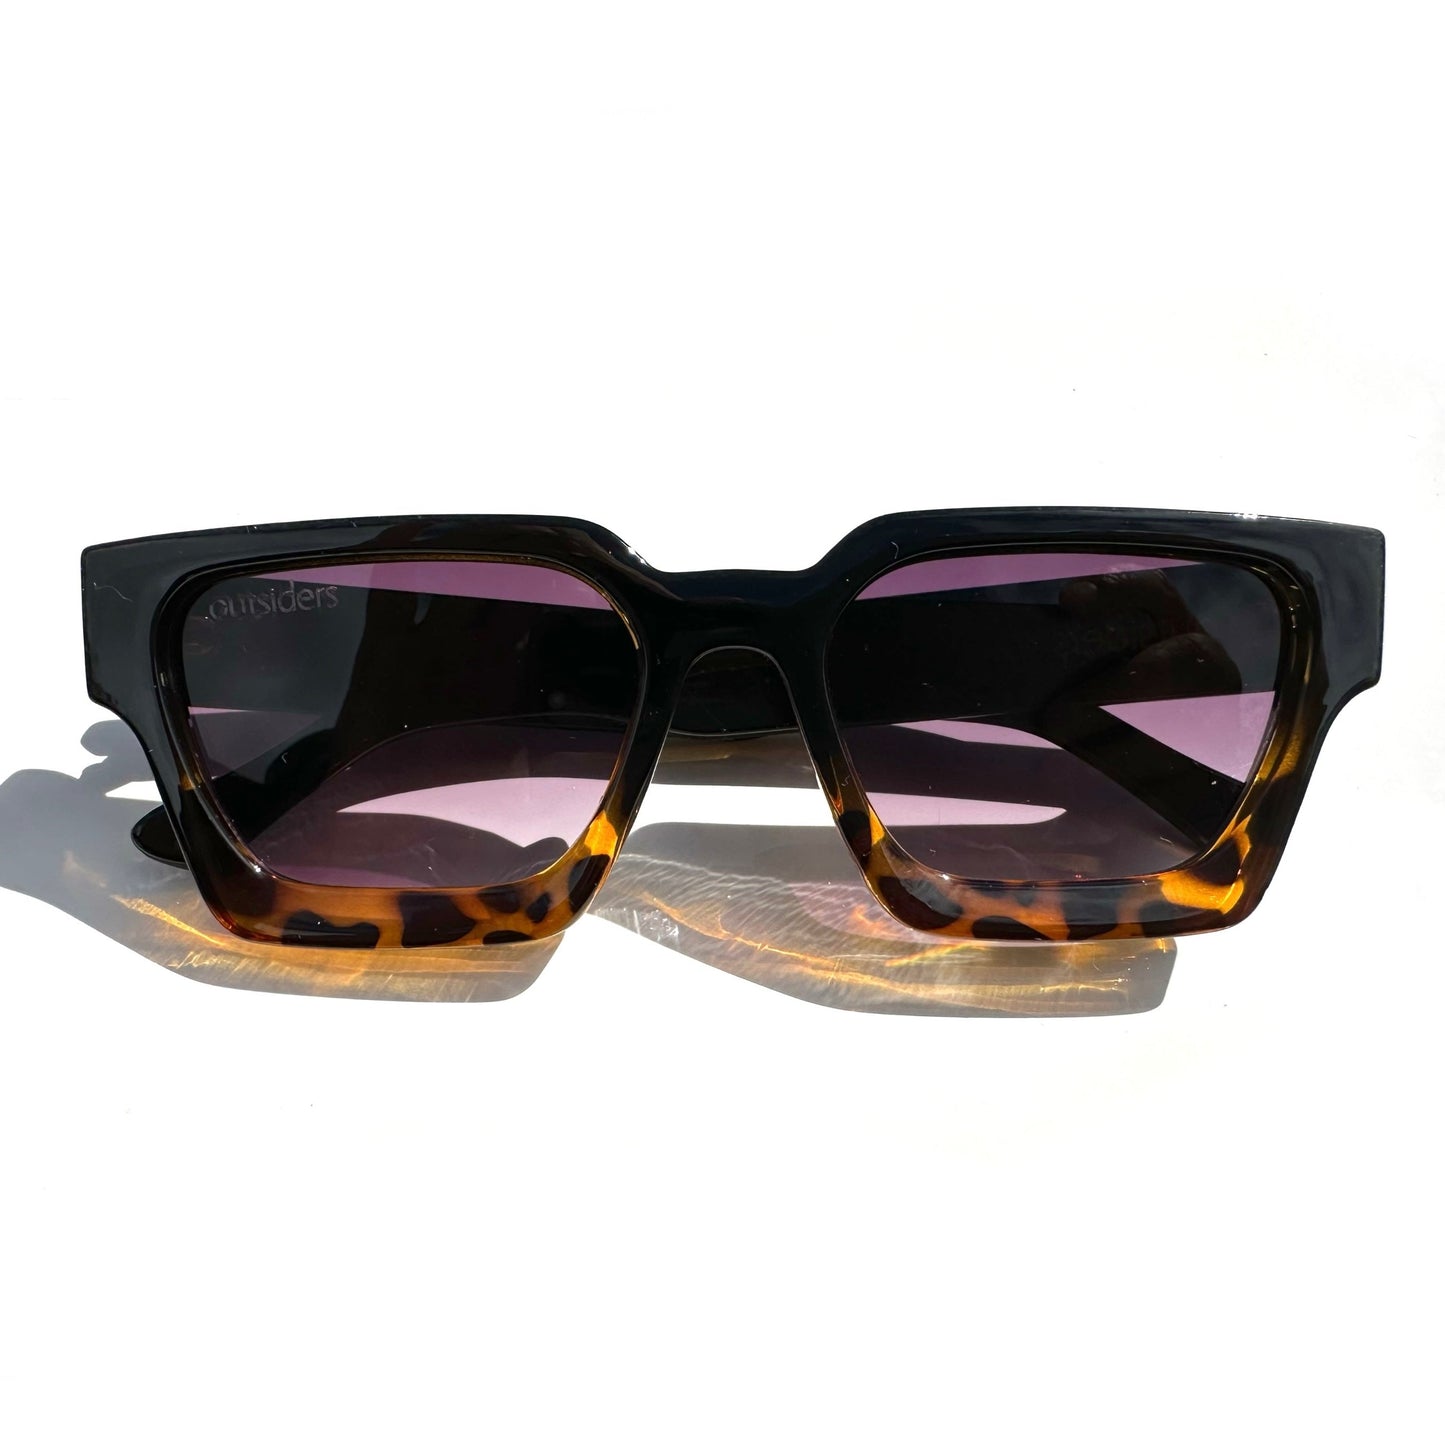 Outsiders Waved Sunglasses - Tortoise Fade / Pink